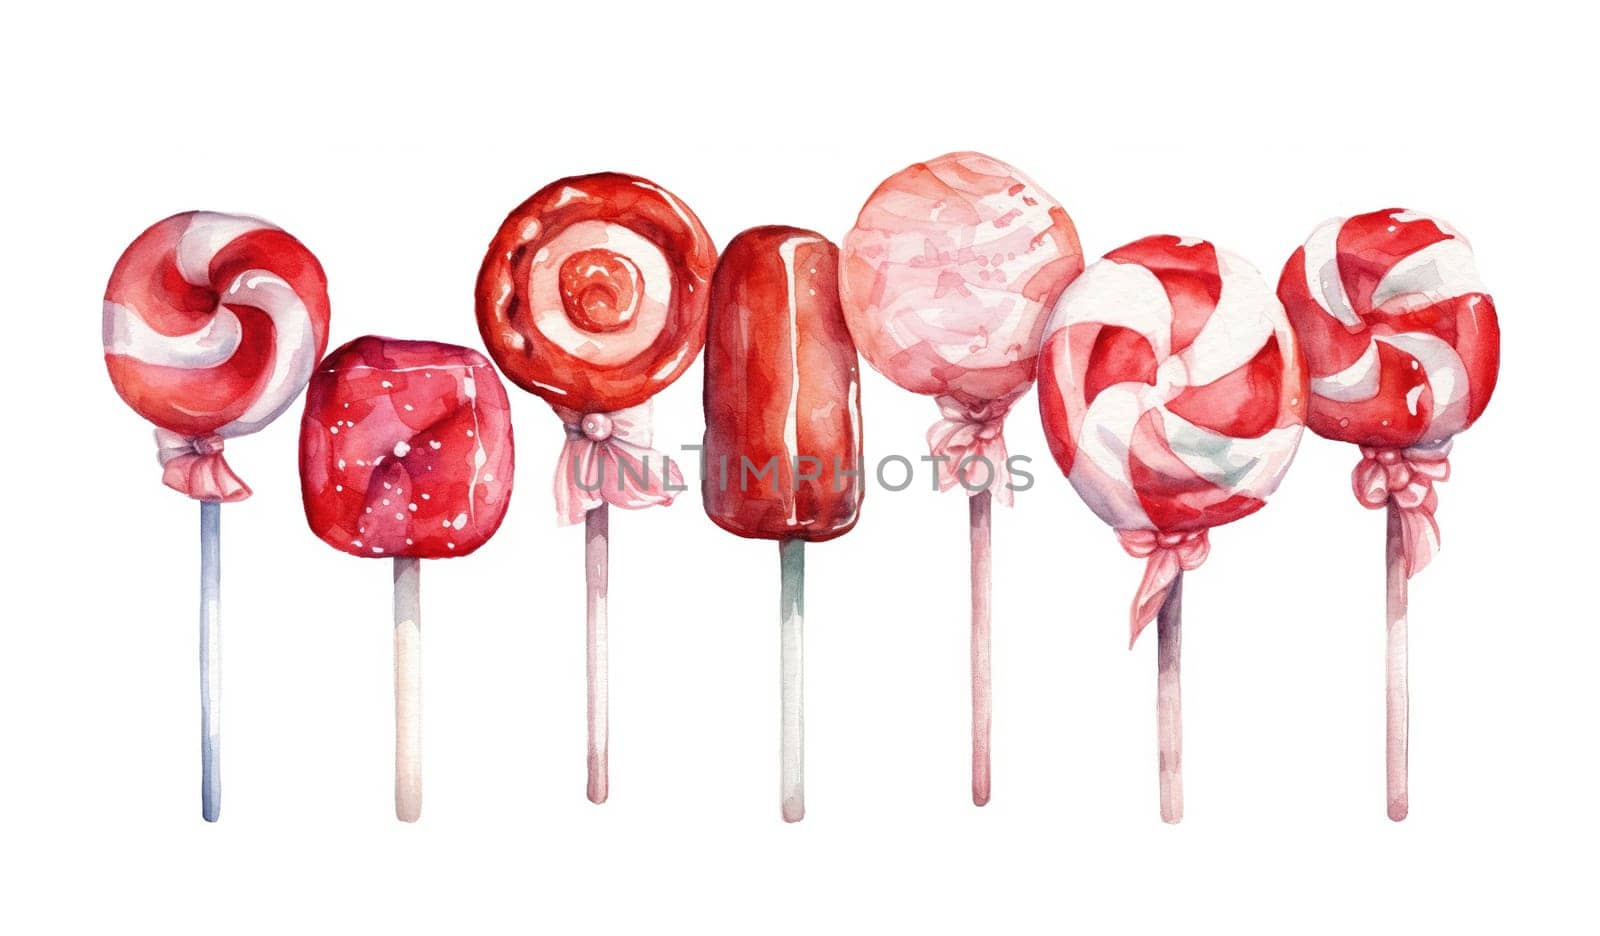 Watercolor Illustration Set Of Sweet Red Lollipops by GekaSkr